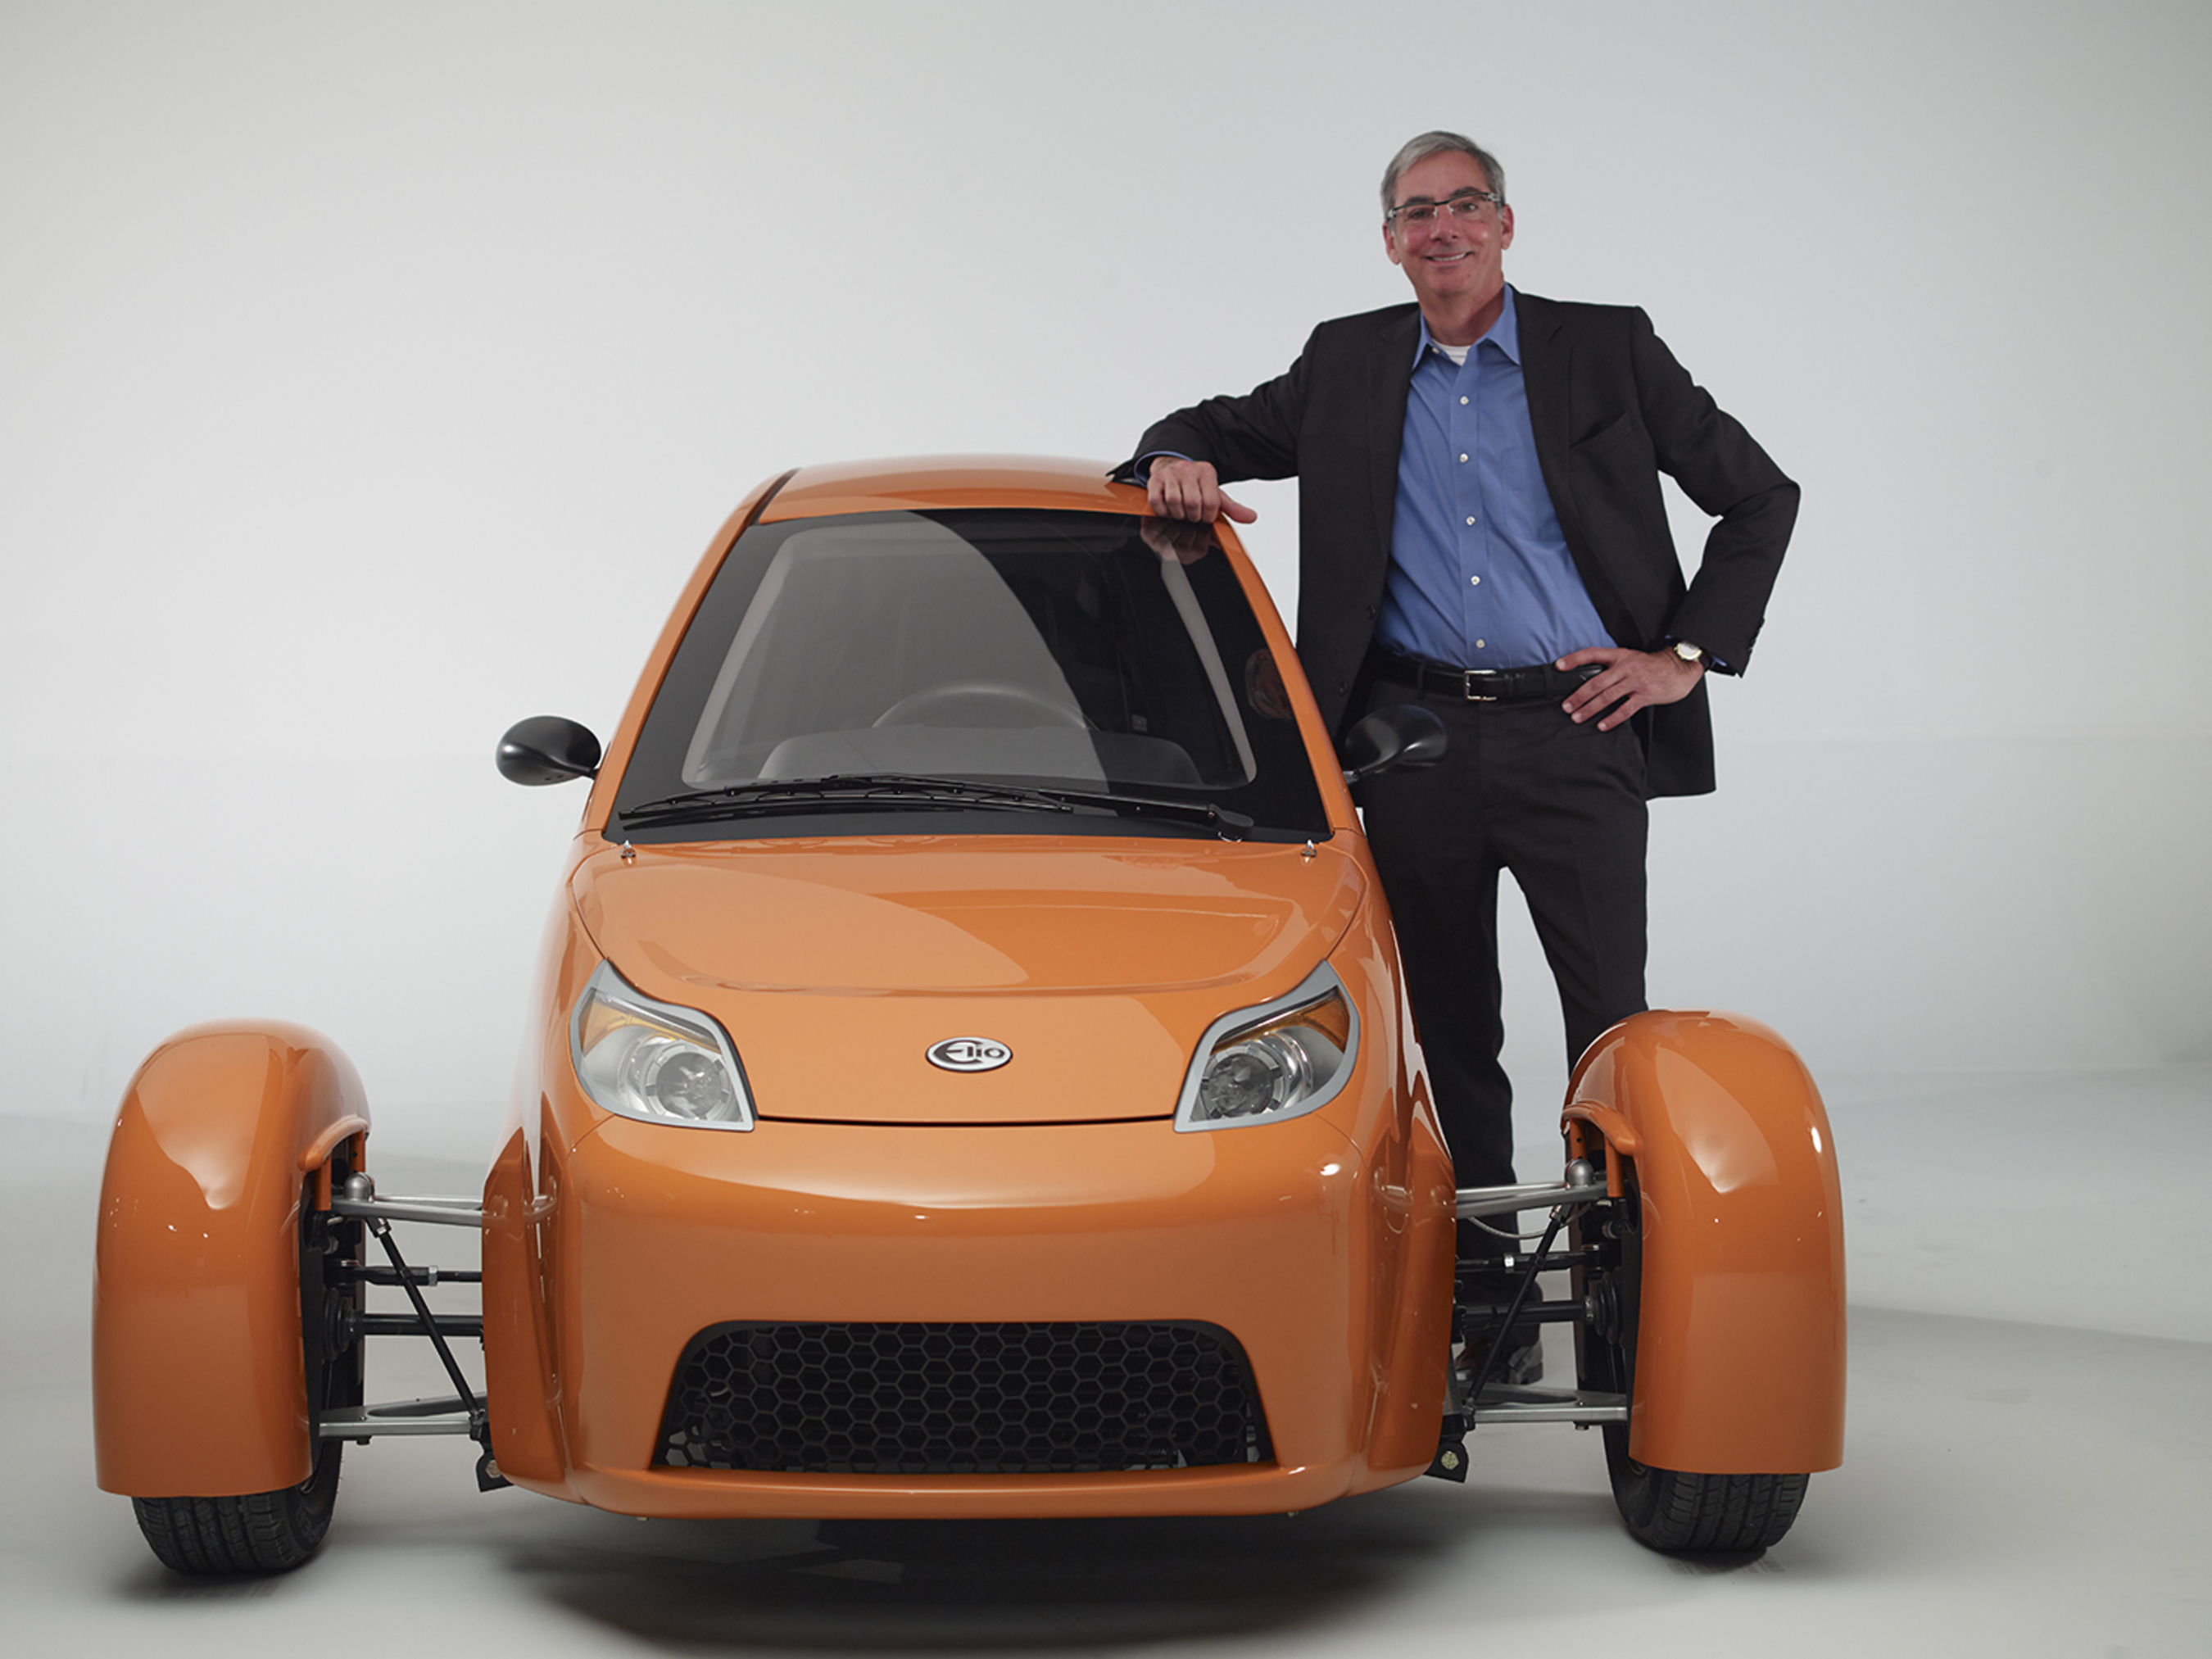 CEO and Founder Paul Elio with the newest Elio motors vehicle. (PRNewsFoto/Elio Motors)